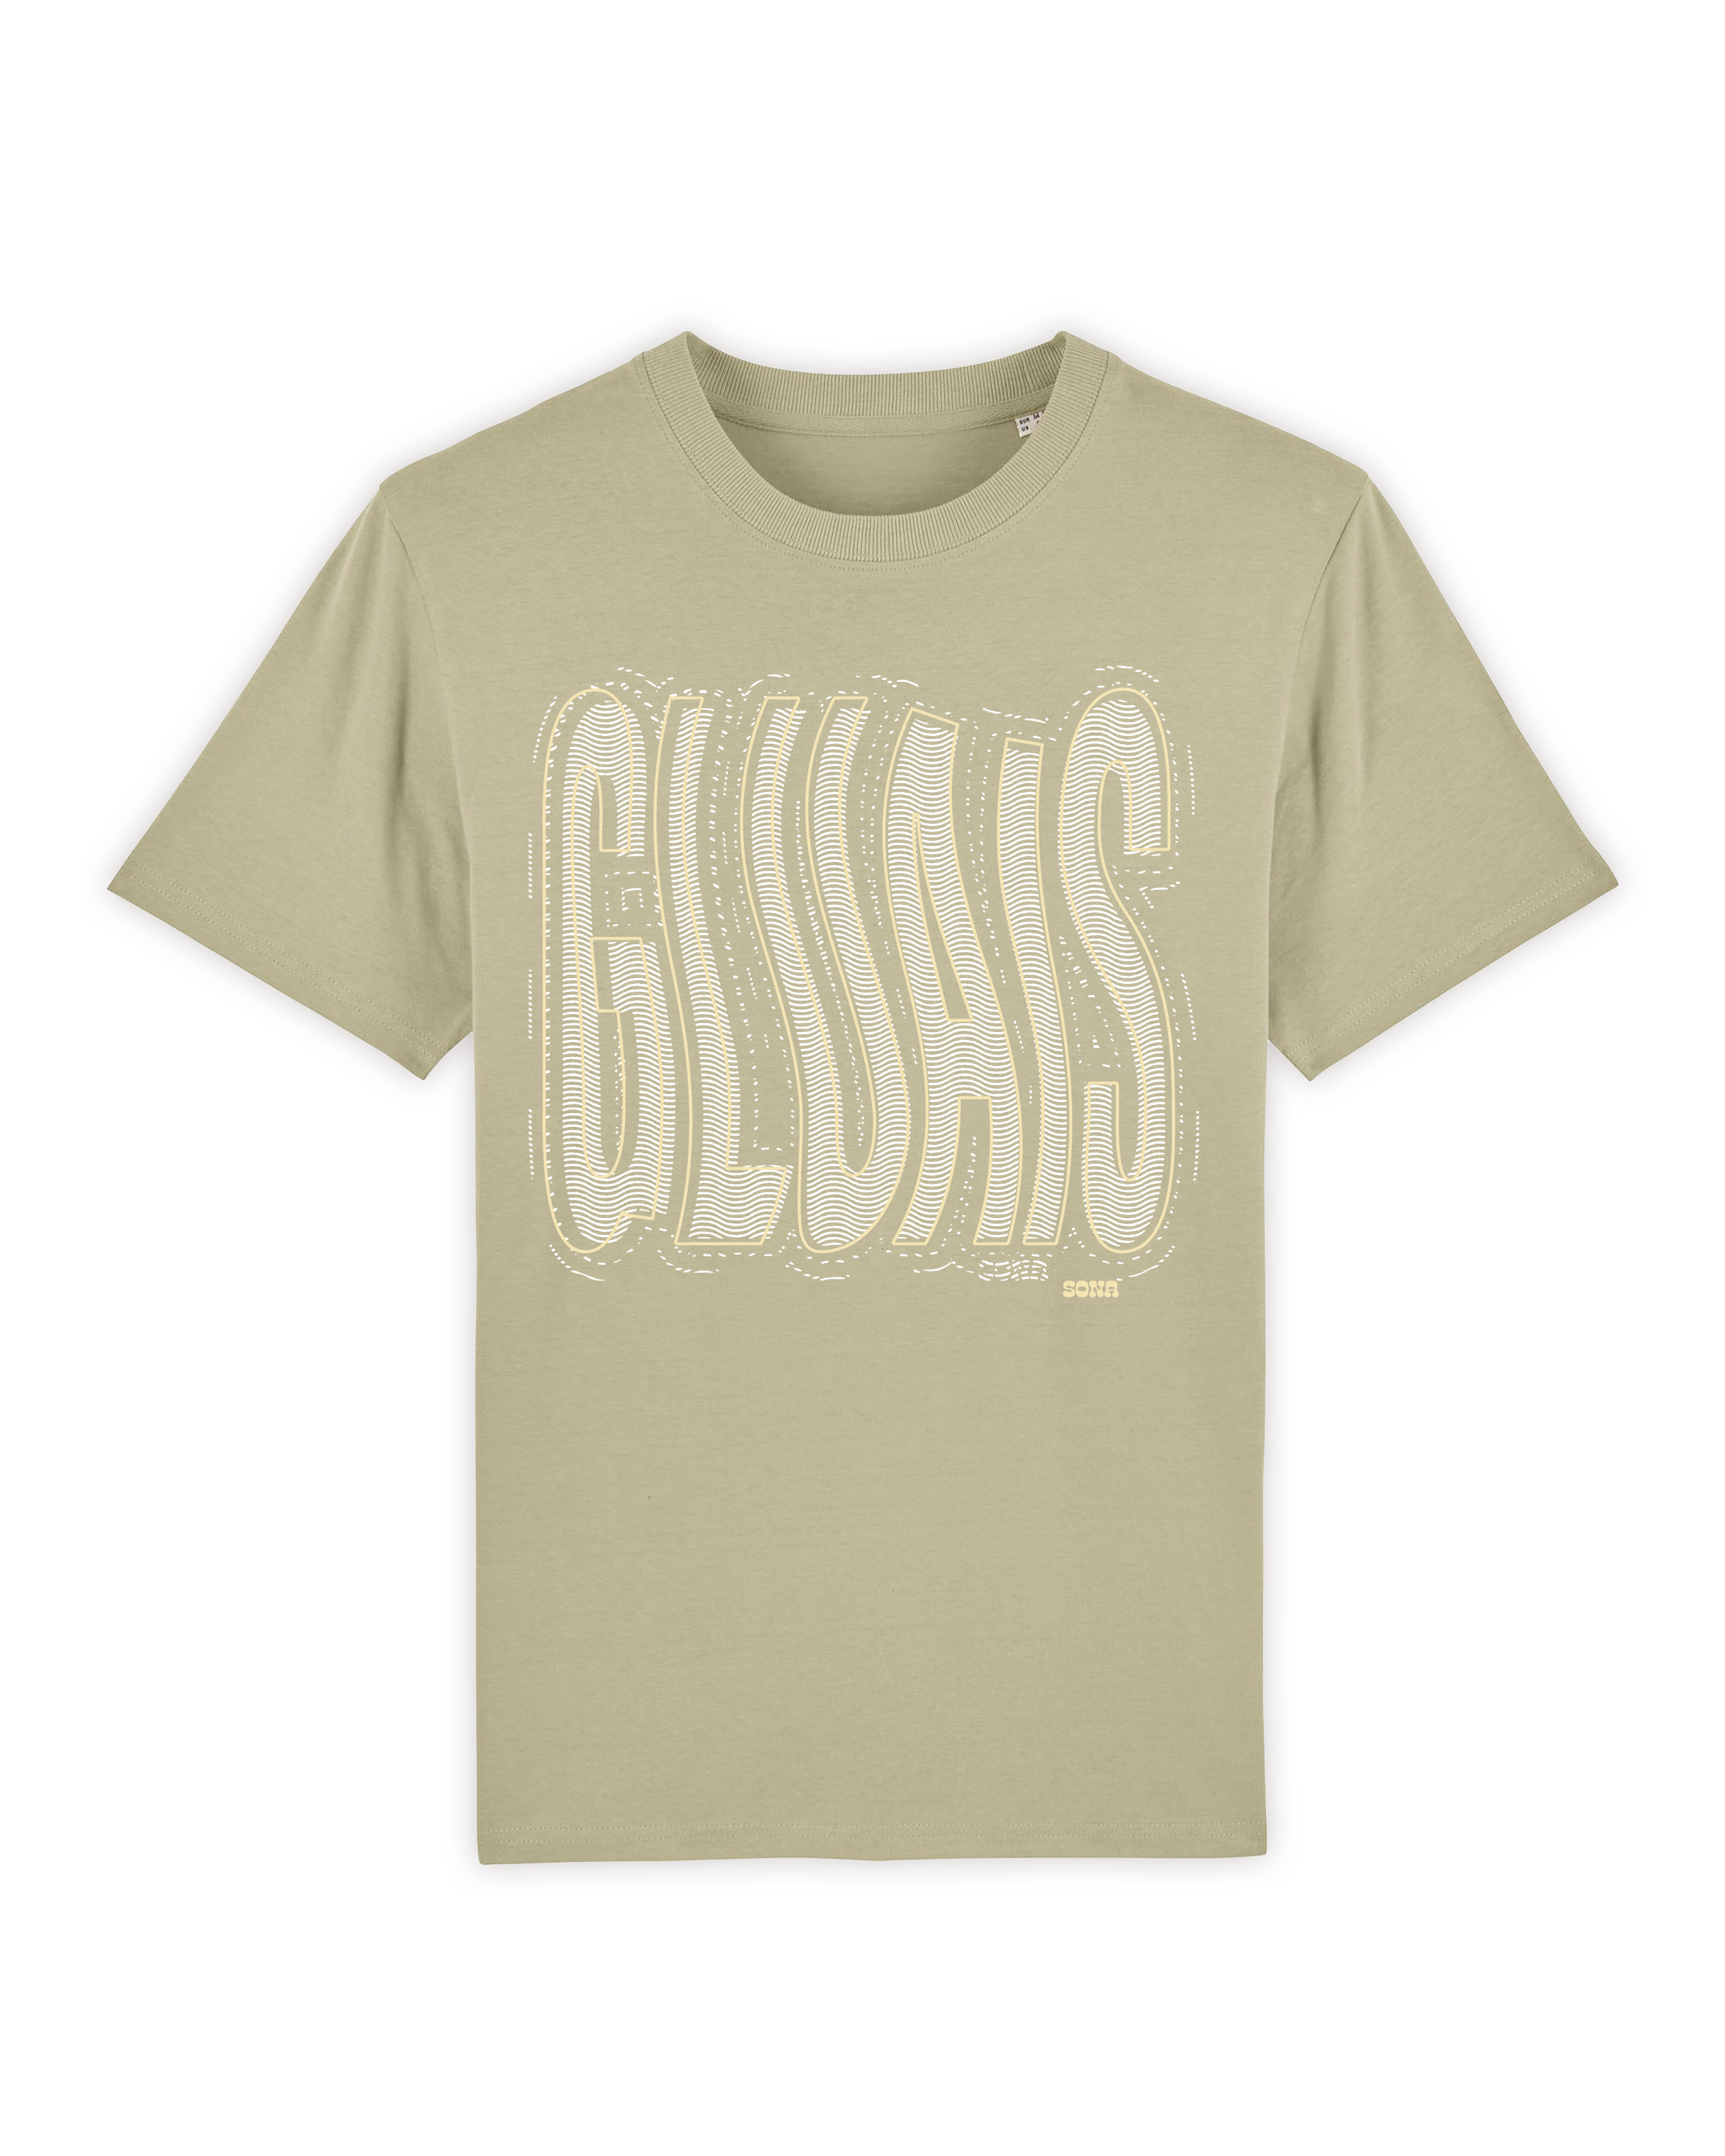 Gluais T-Shirt - Sona Design